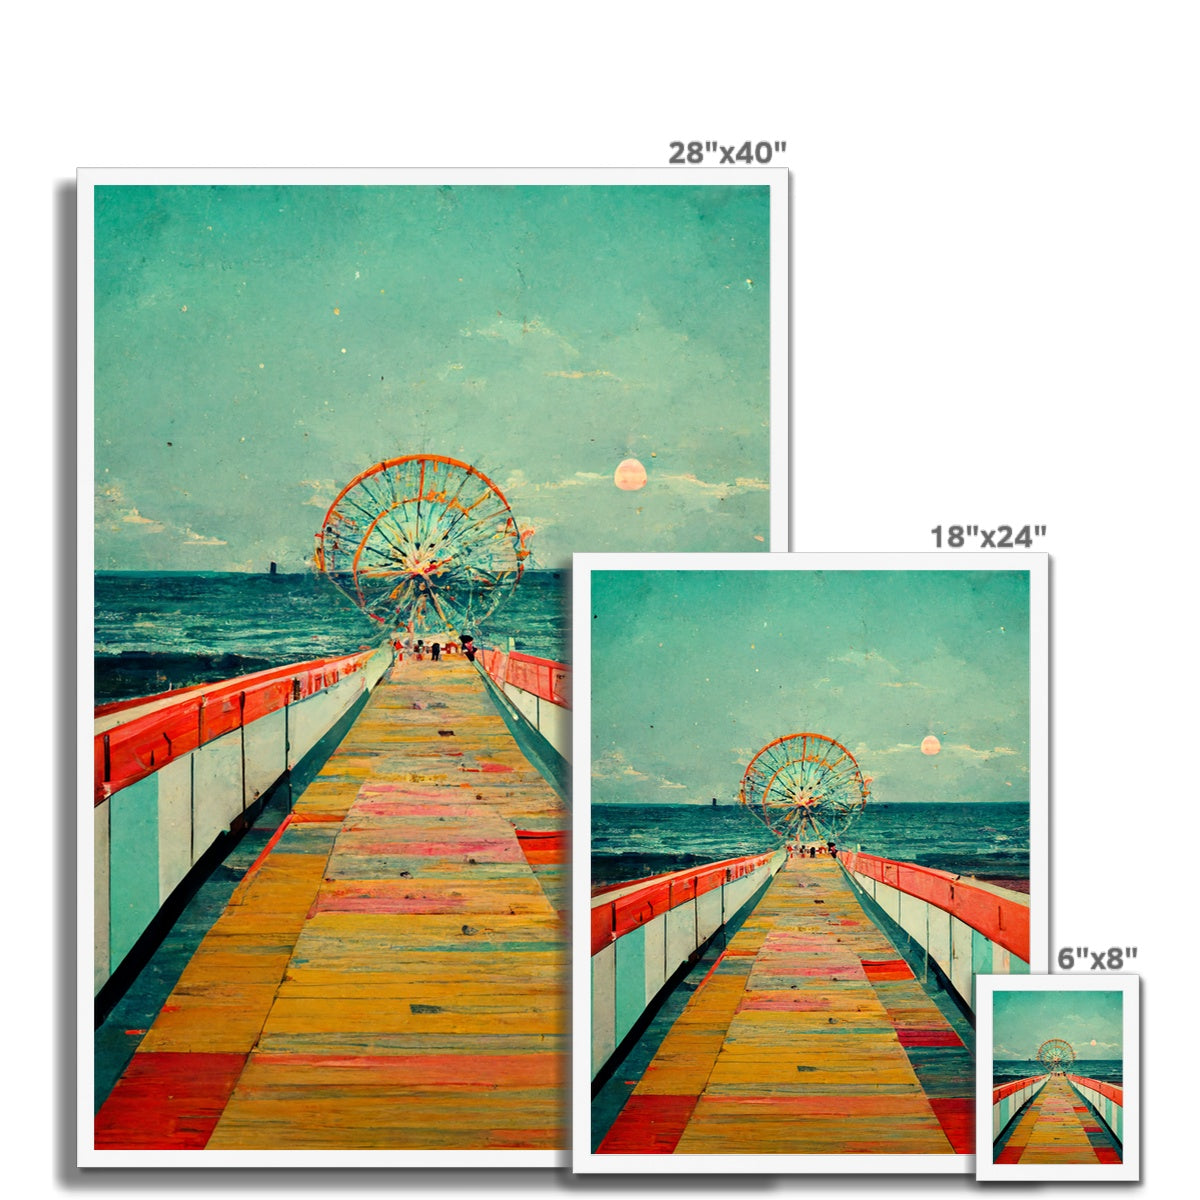 Boardwalk Framed Print